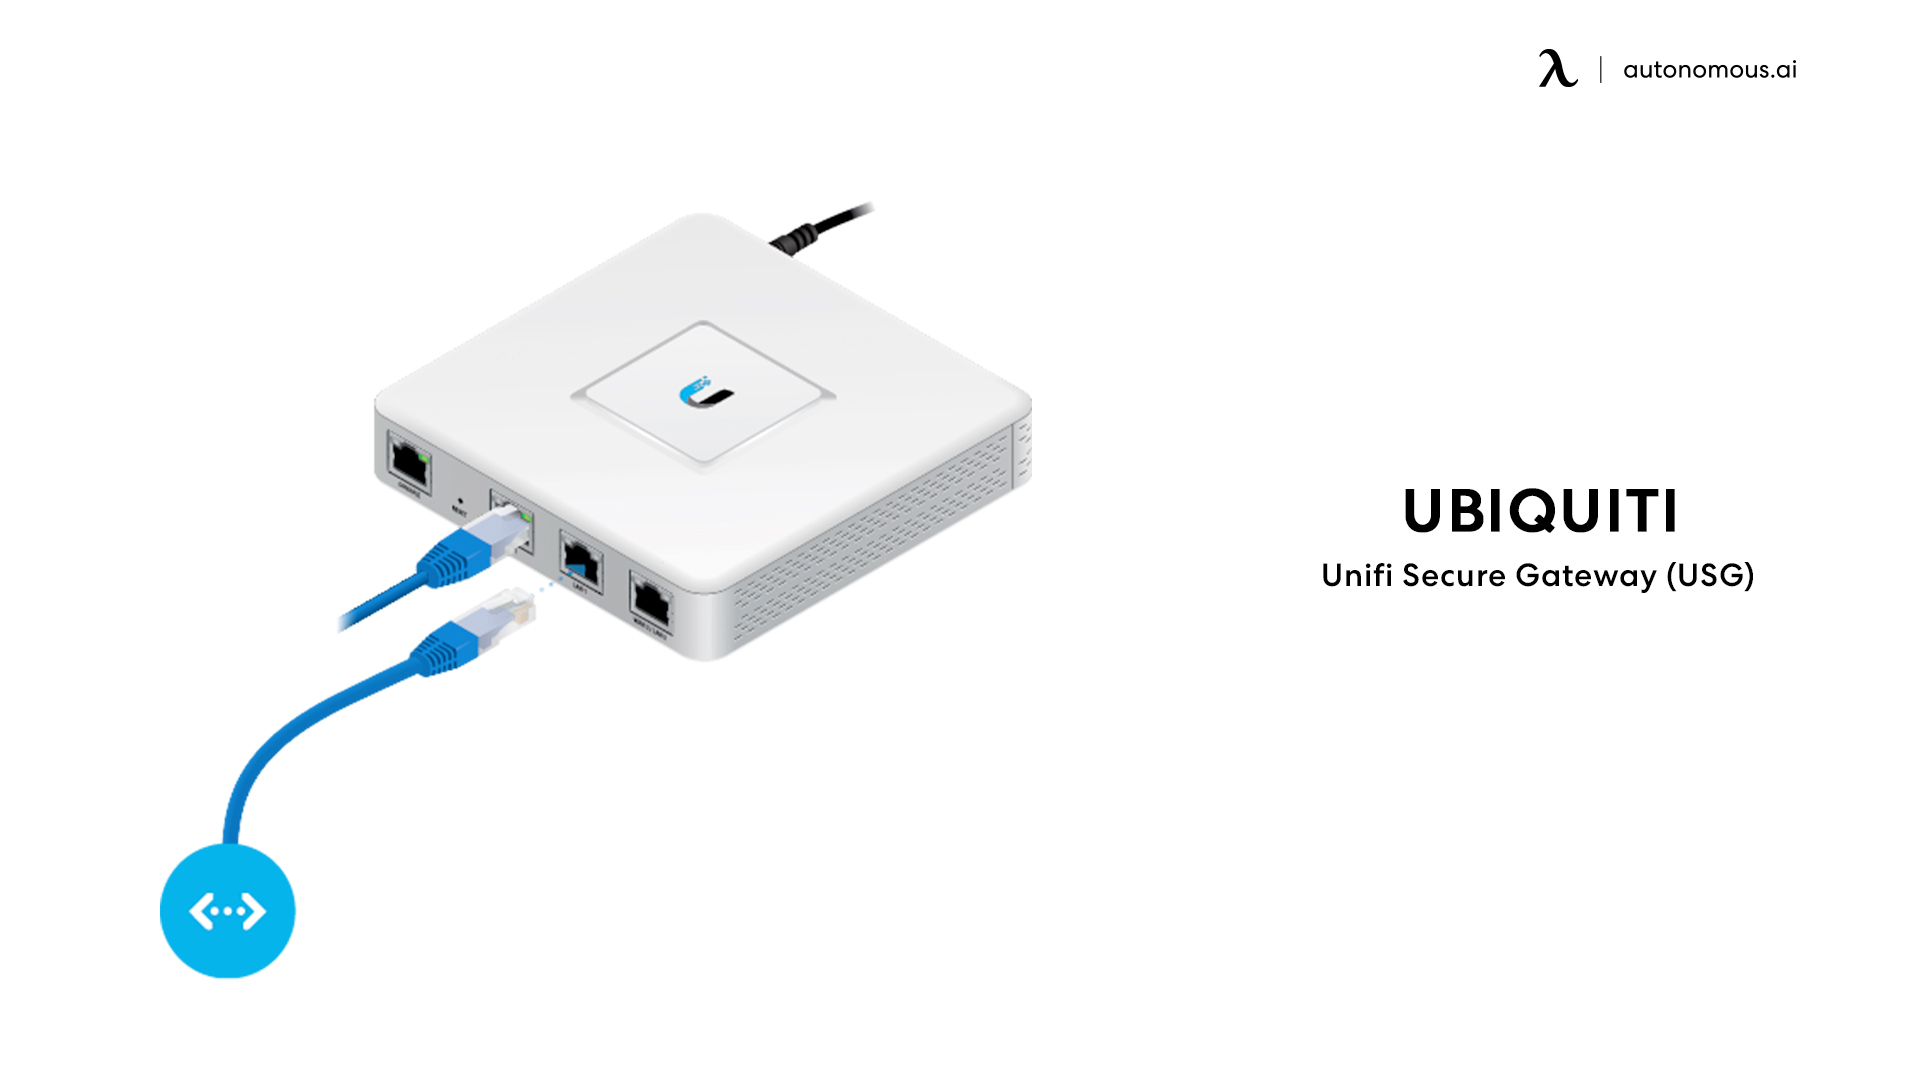 Unifi Secure Gateway (USG) by Ubiquiti